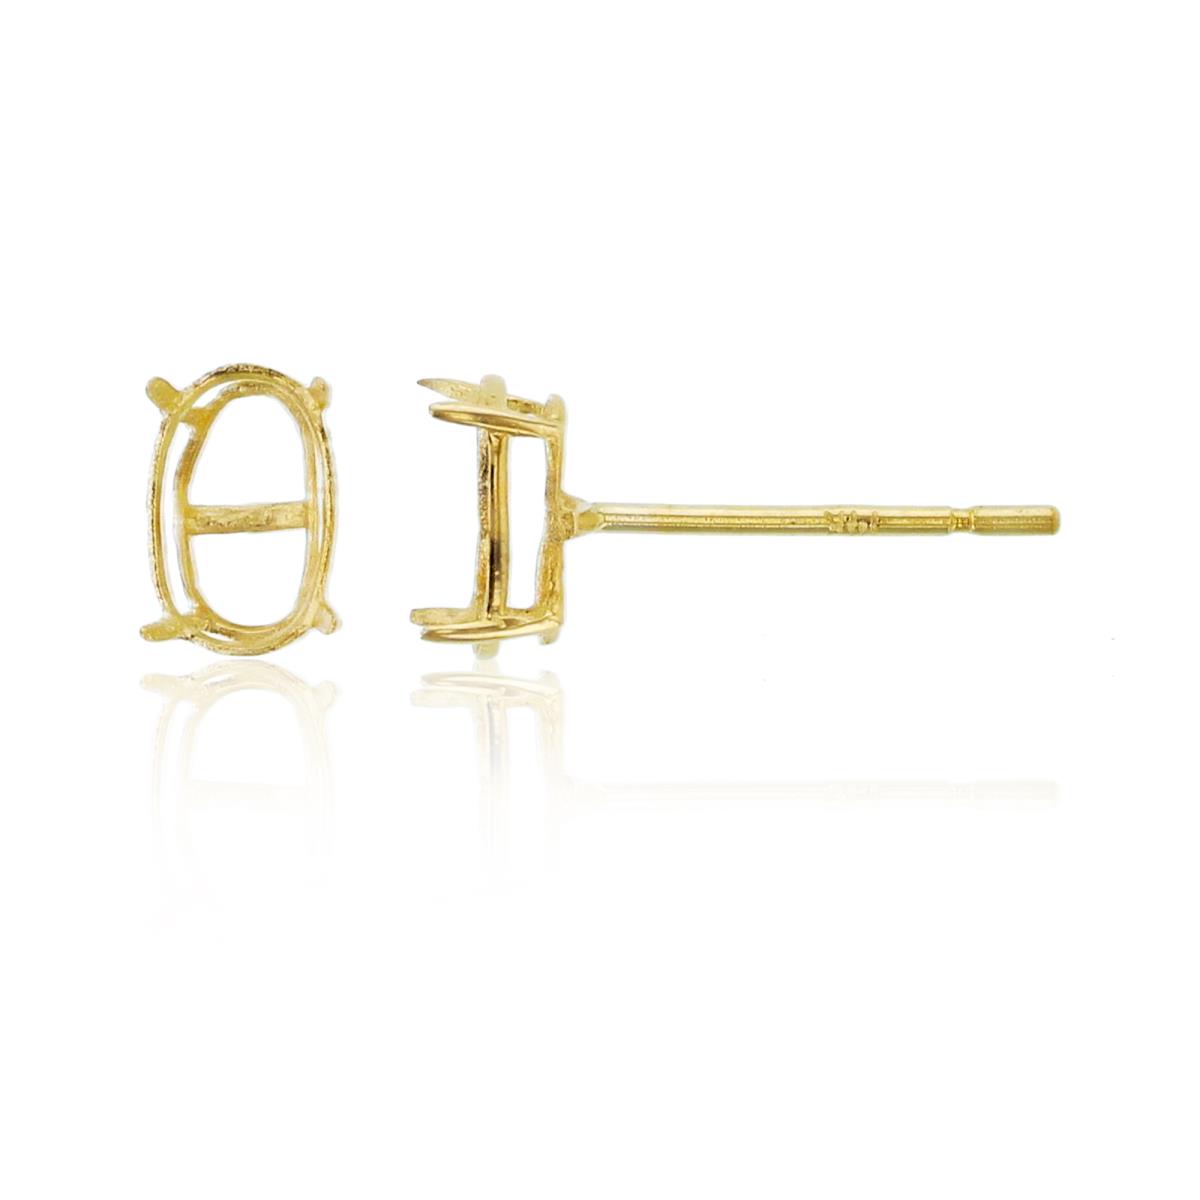 14K Yellow Gold 5x3mm Oval Basket Stud Earrings-1PR. No stones.